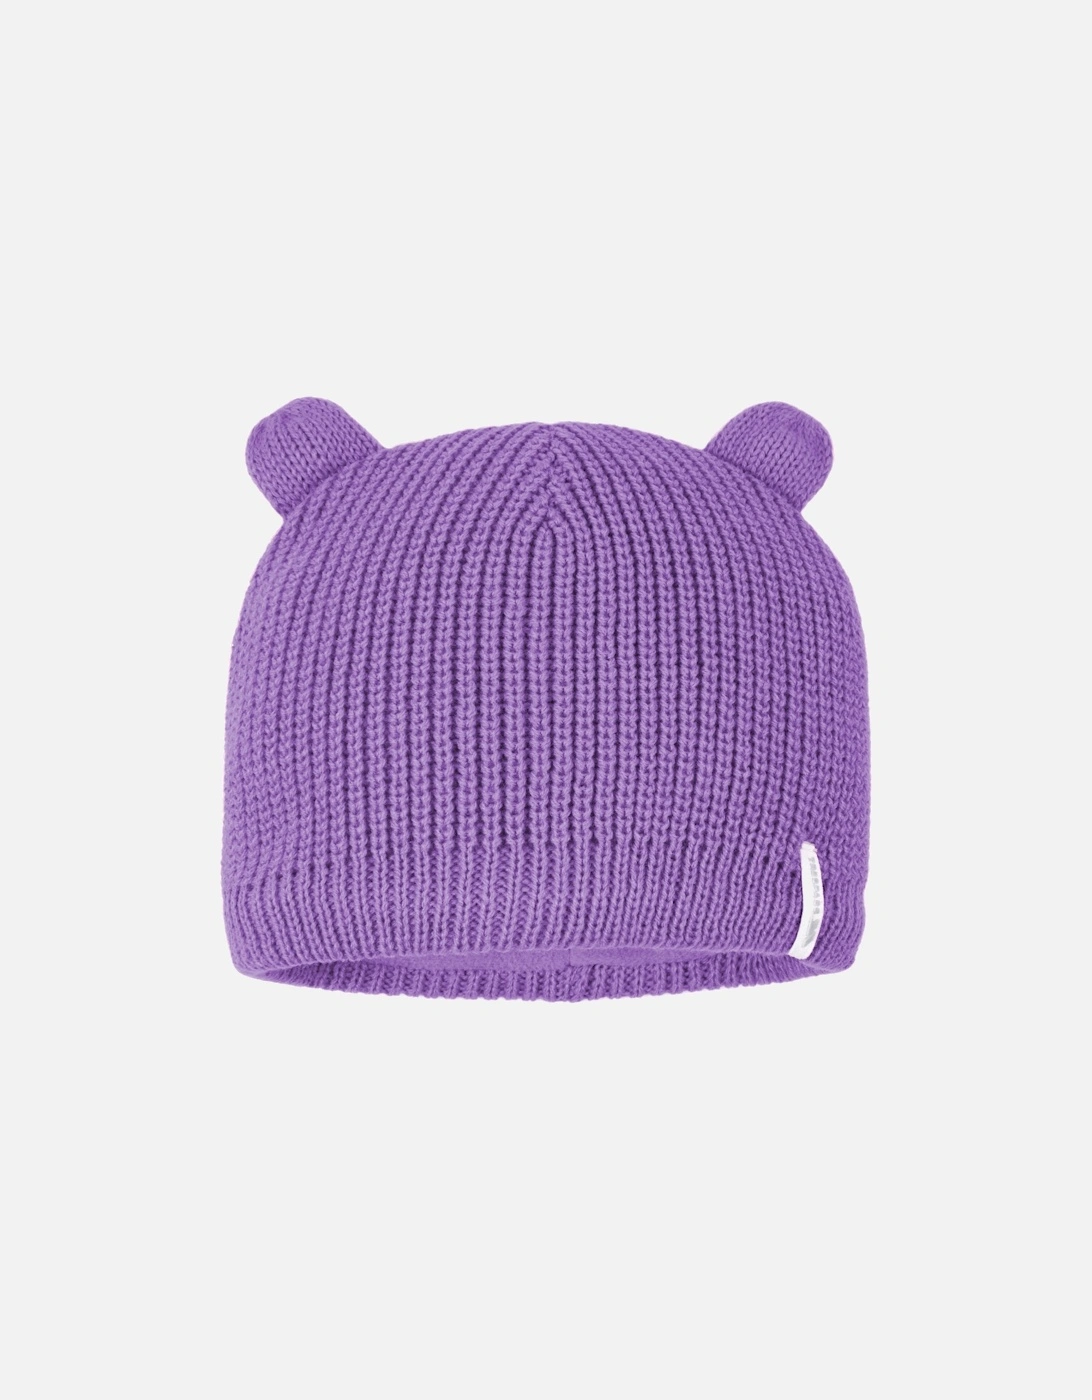 Childrens/Kids Toot Knitted Winter Beanie Hat